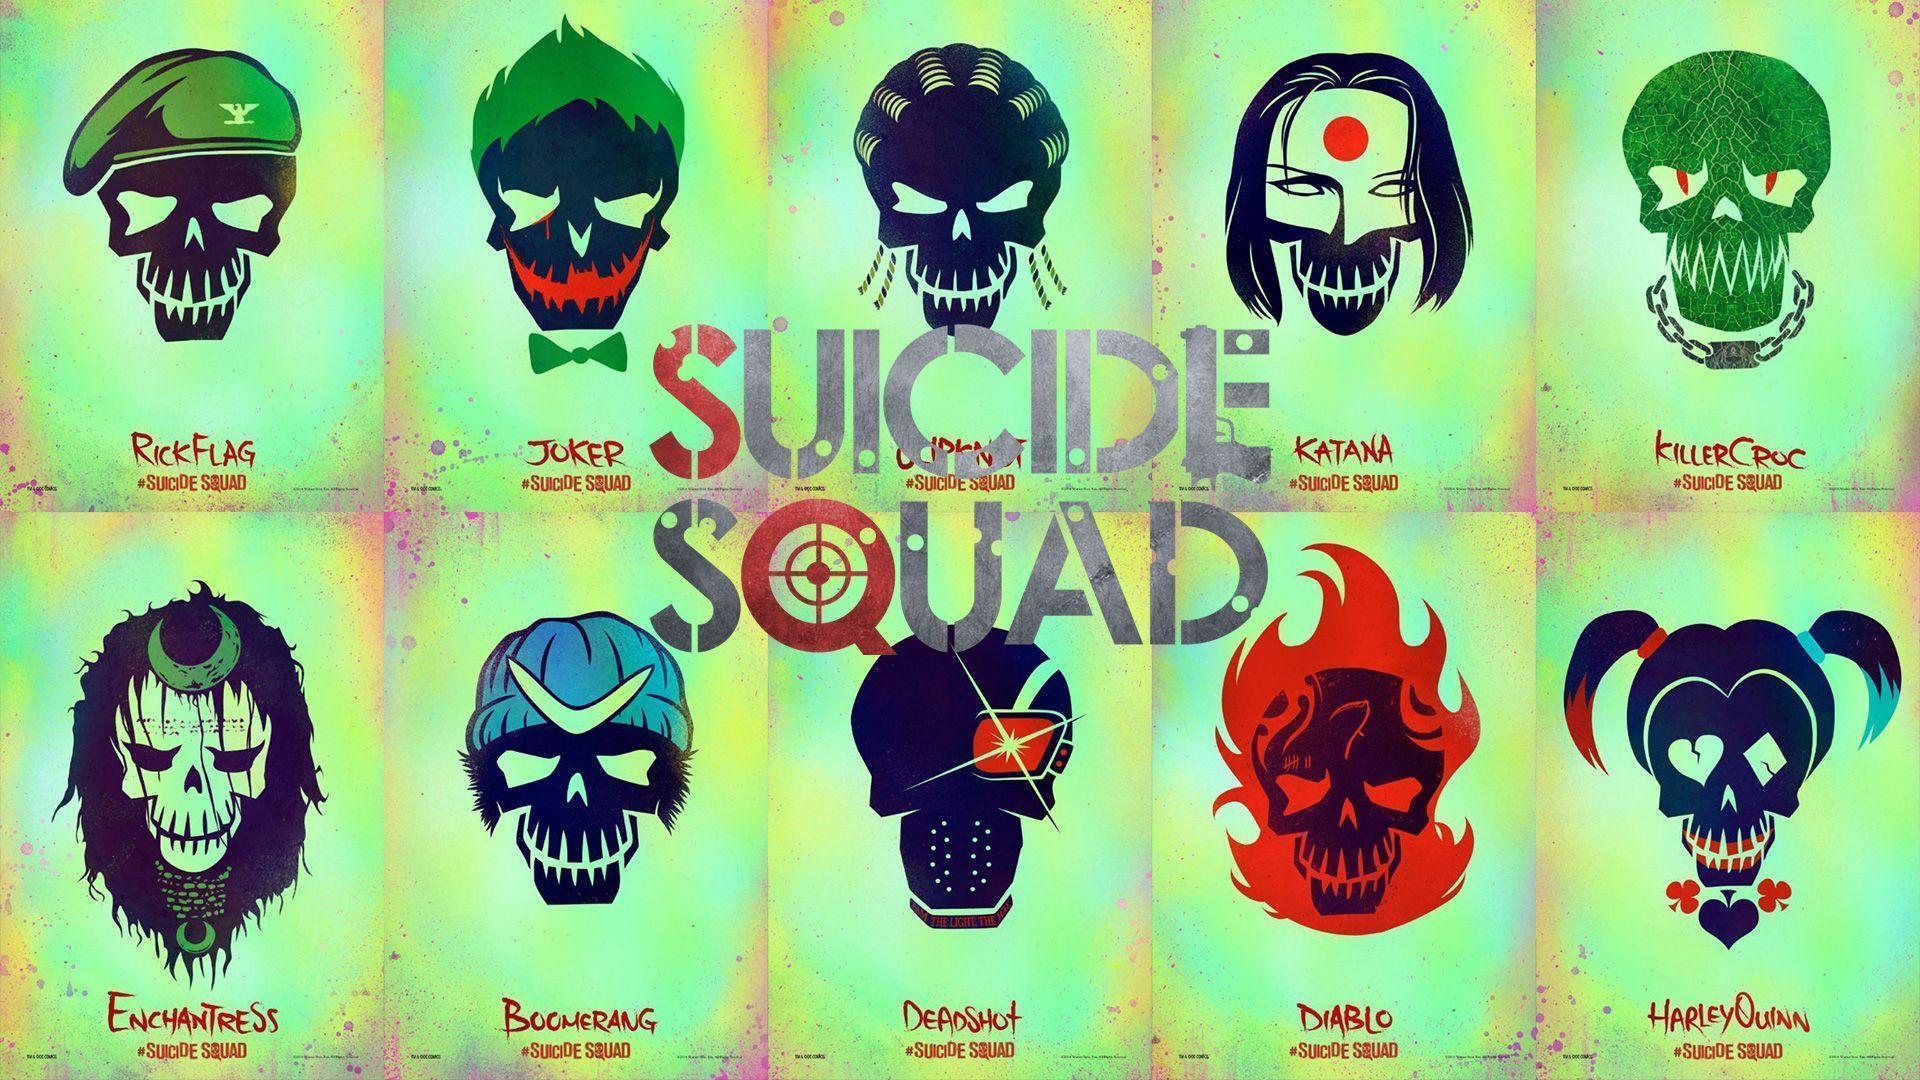 Suicide Squad Joker Wallpaper